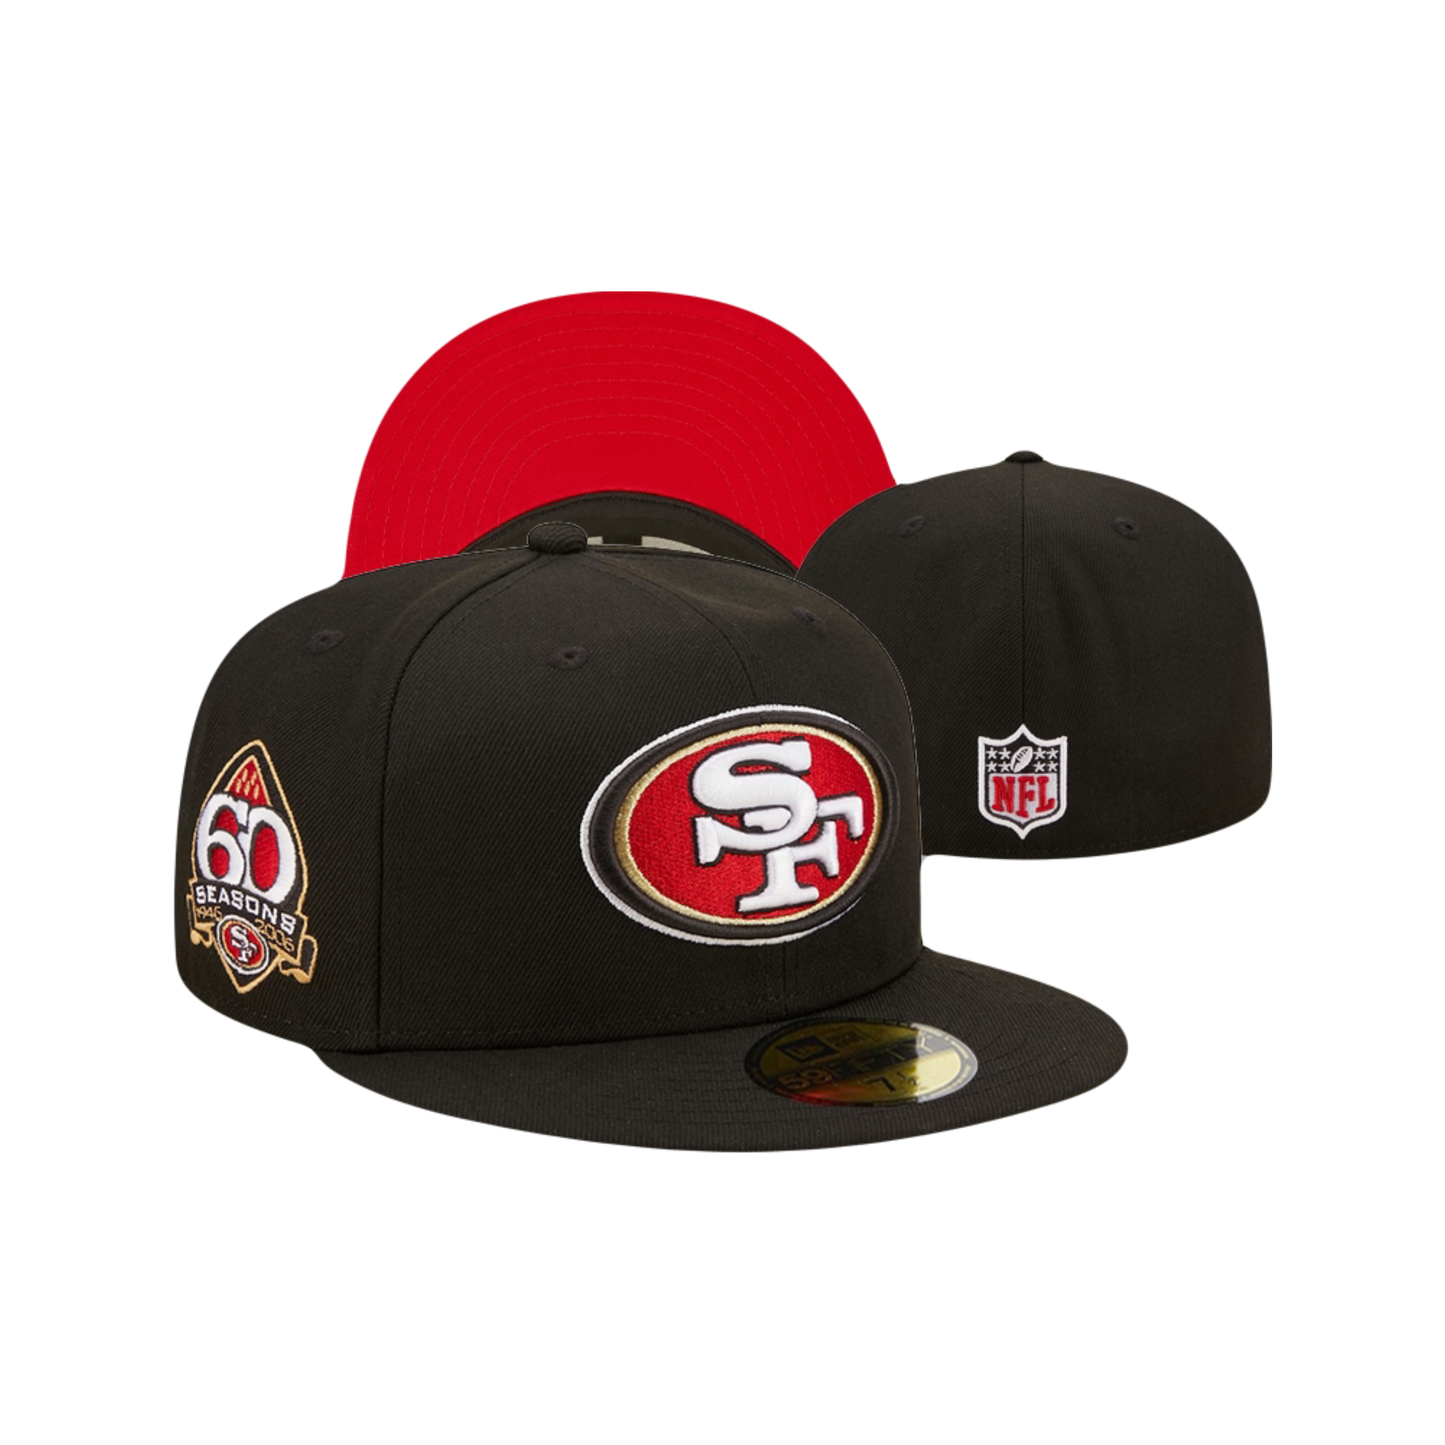 San Francisco 49ers New Era NFL ‘60th Season’ Black Fitted Hat